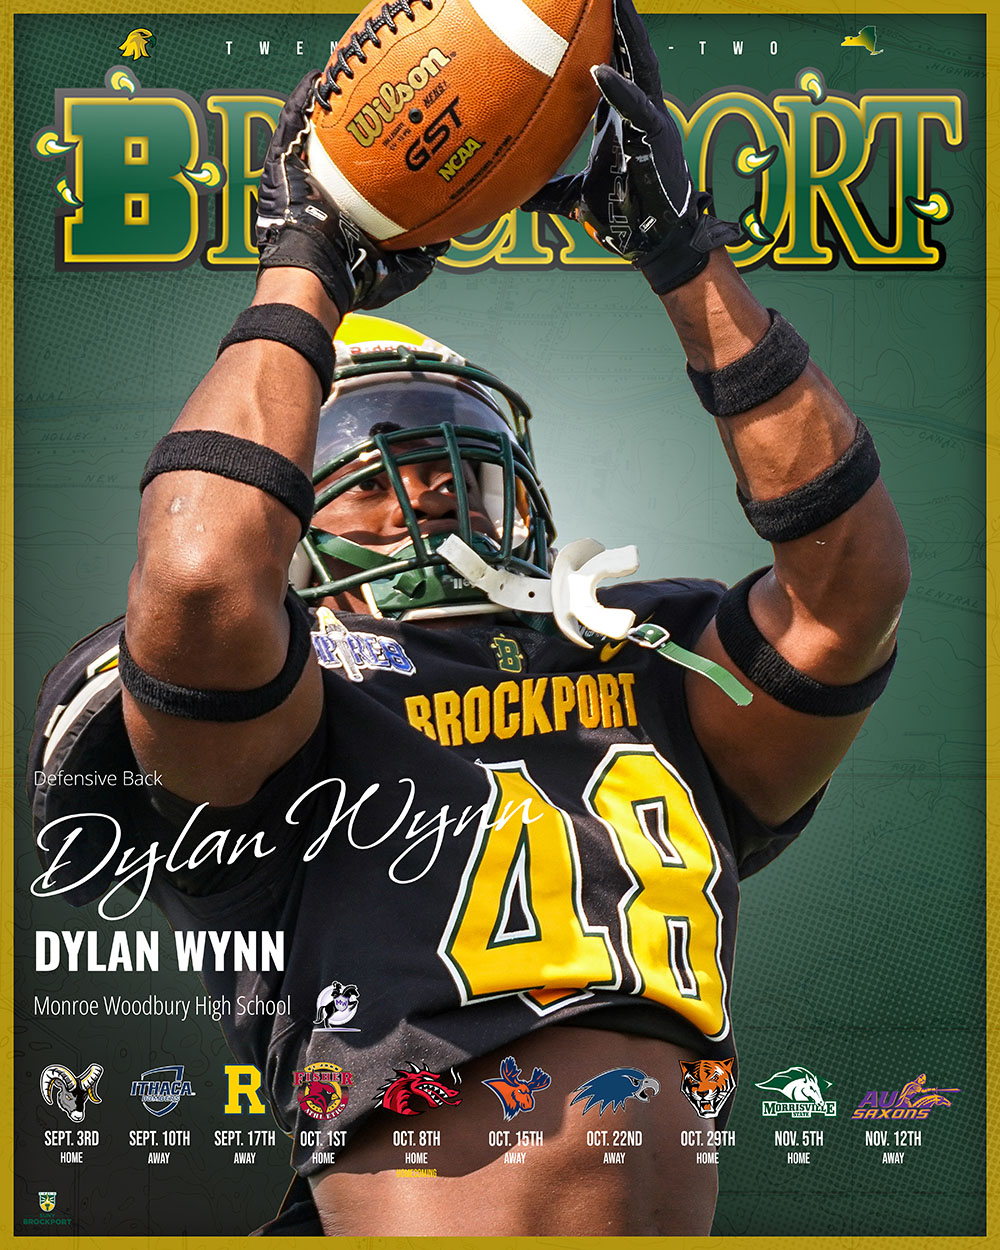 Brockport Football Senior Dylan Wynn